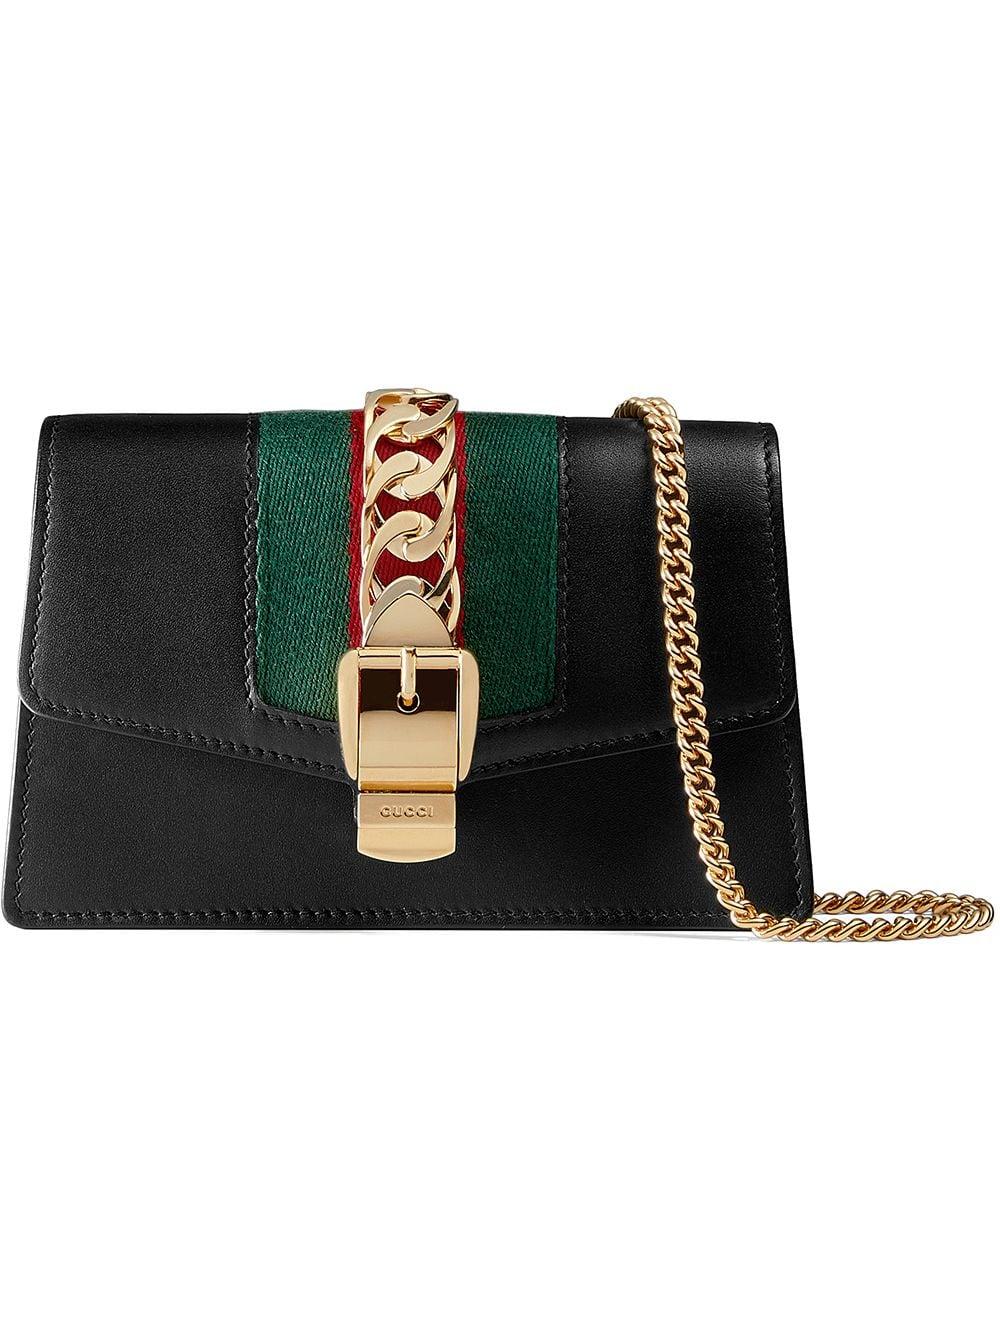 Gucci Sylvie Leather Mini Chain Bag in Black | Lyst